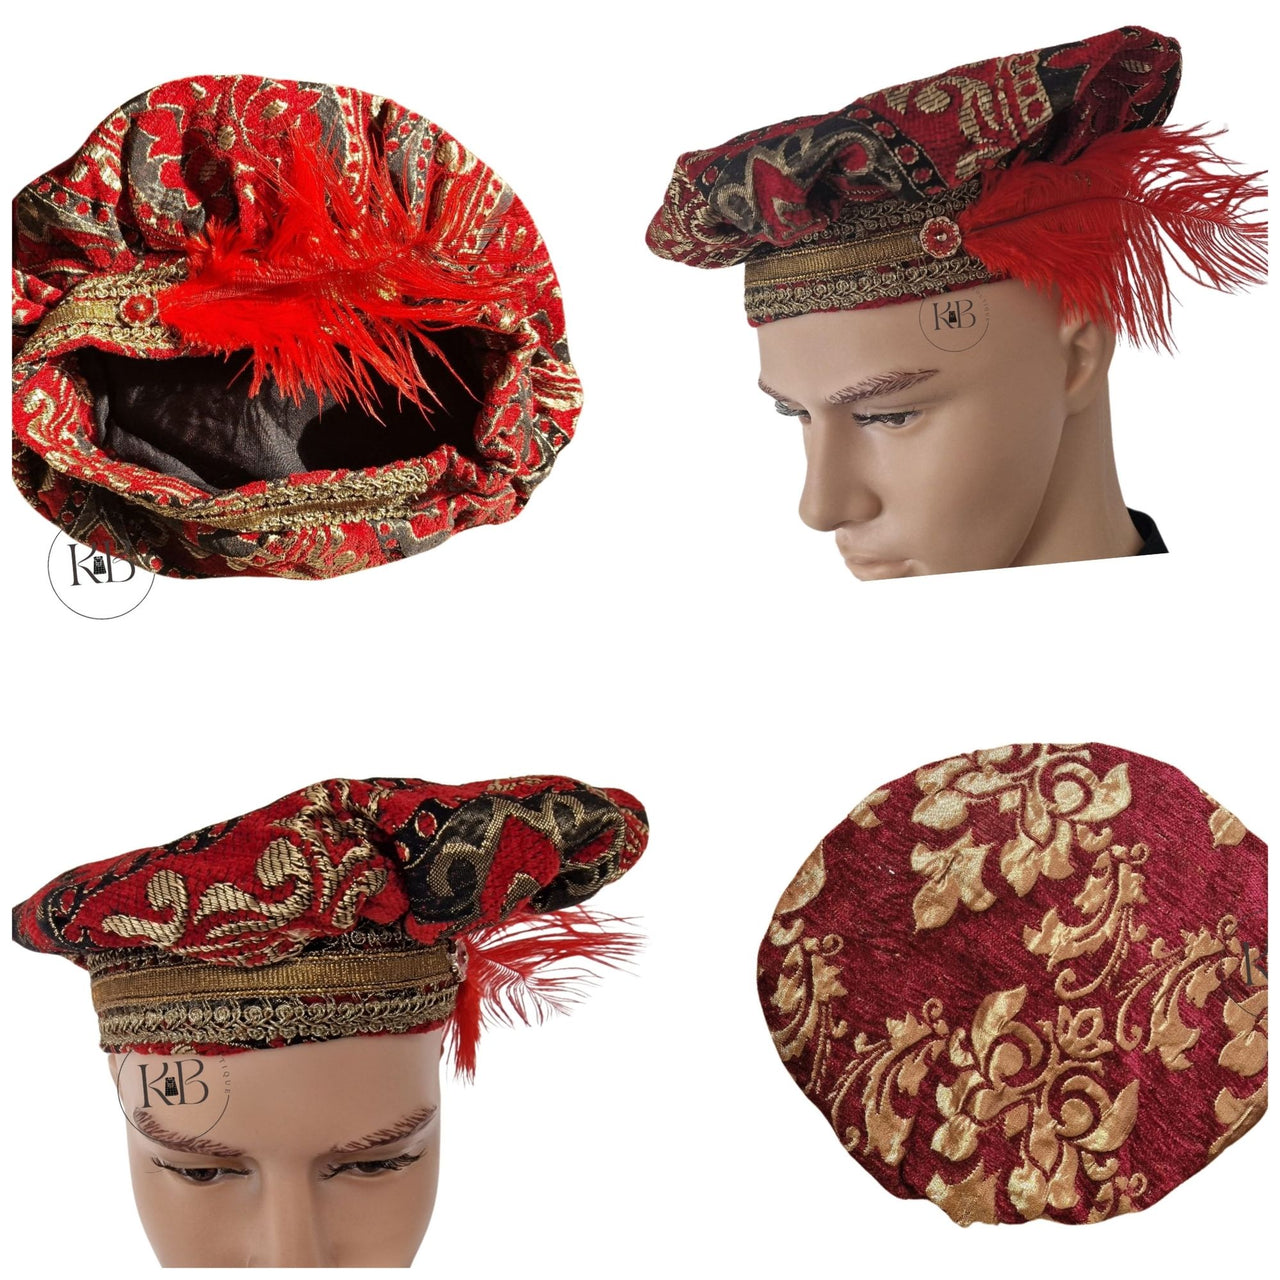 Renaissance Medieval Elizabethan Victorian Revolutionary red / gold buccaneer colonial floppy poet muffin hat